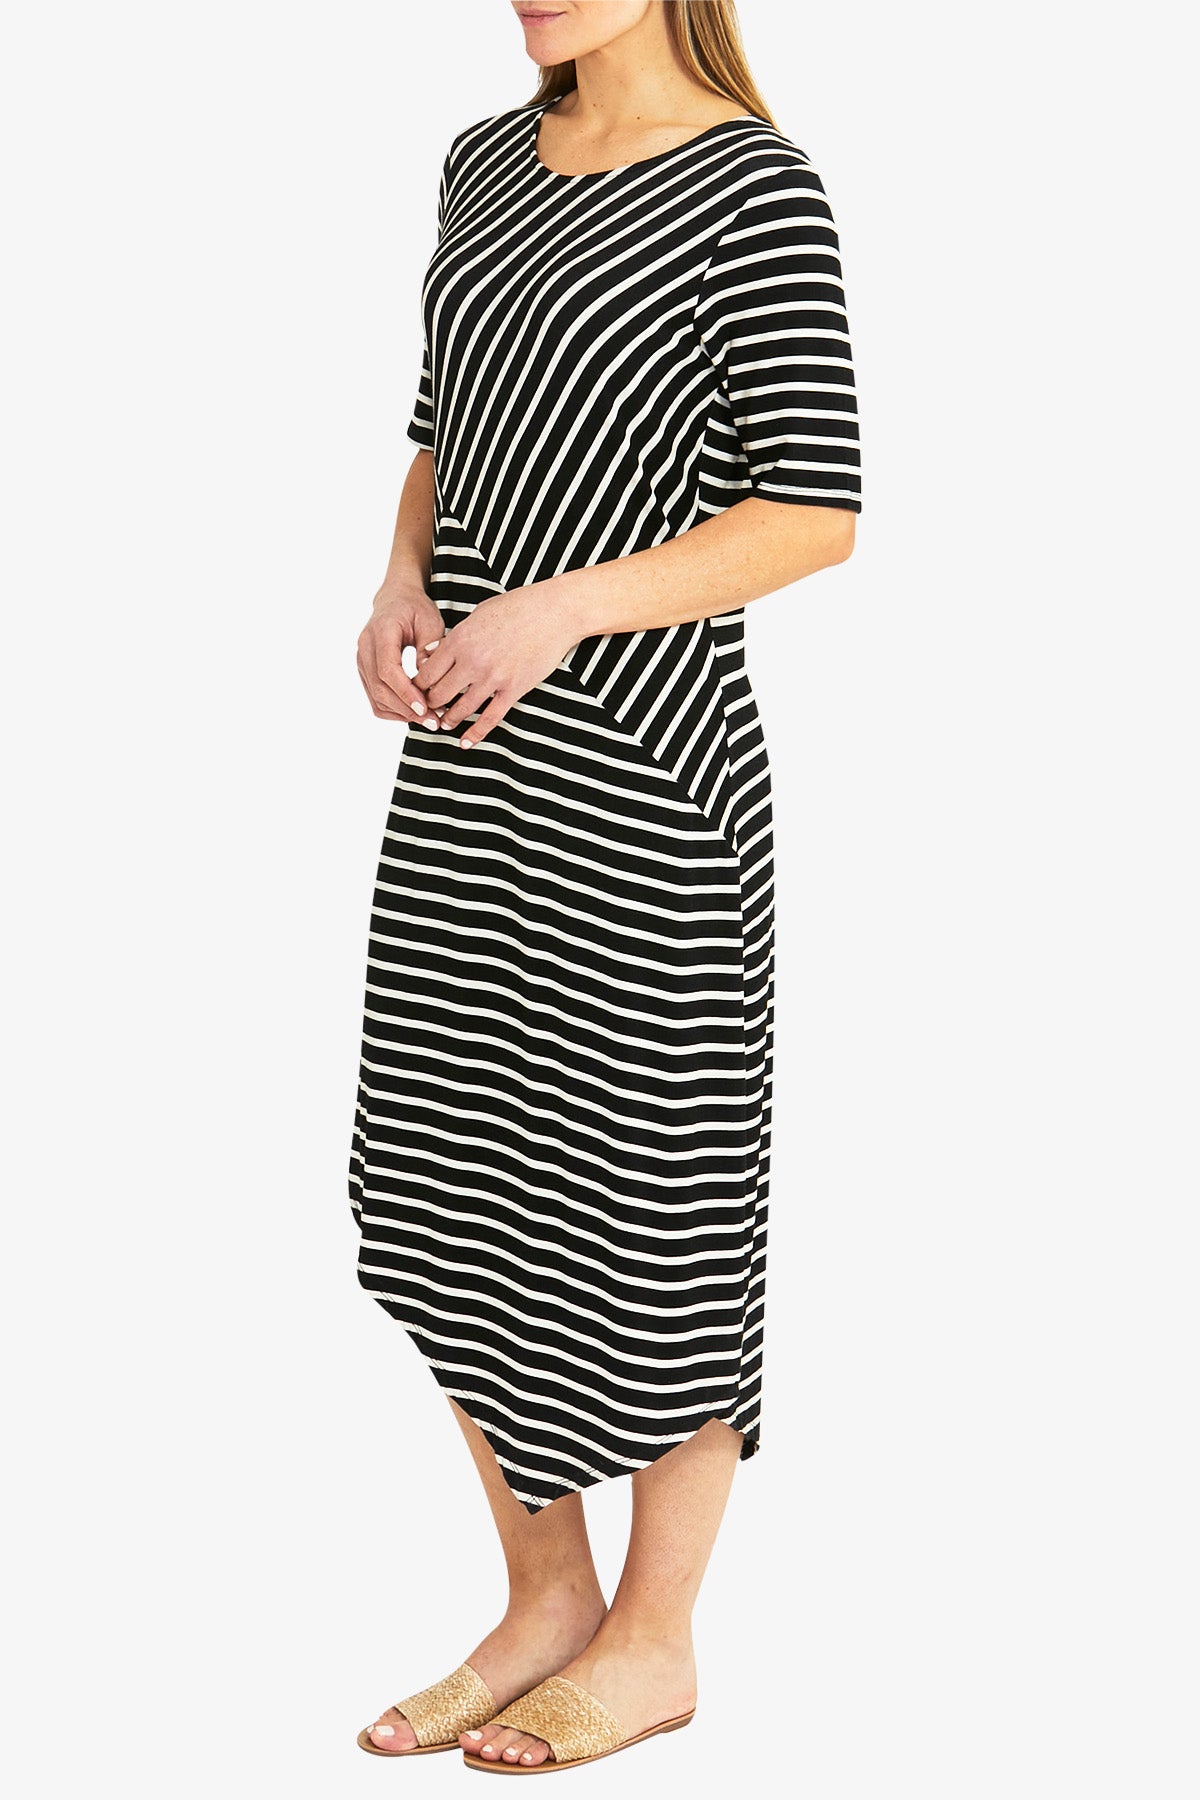 Elbow Sleeve Spliced Stripe Dress Black and Flax